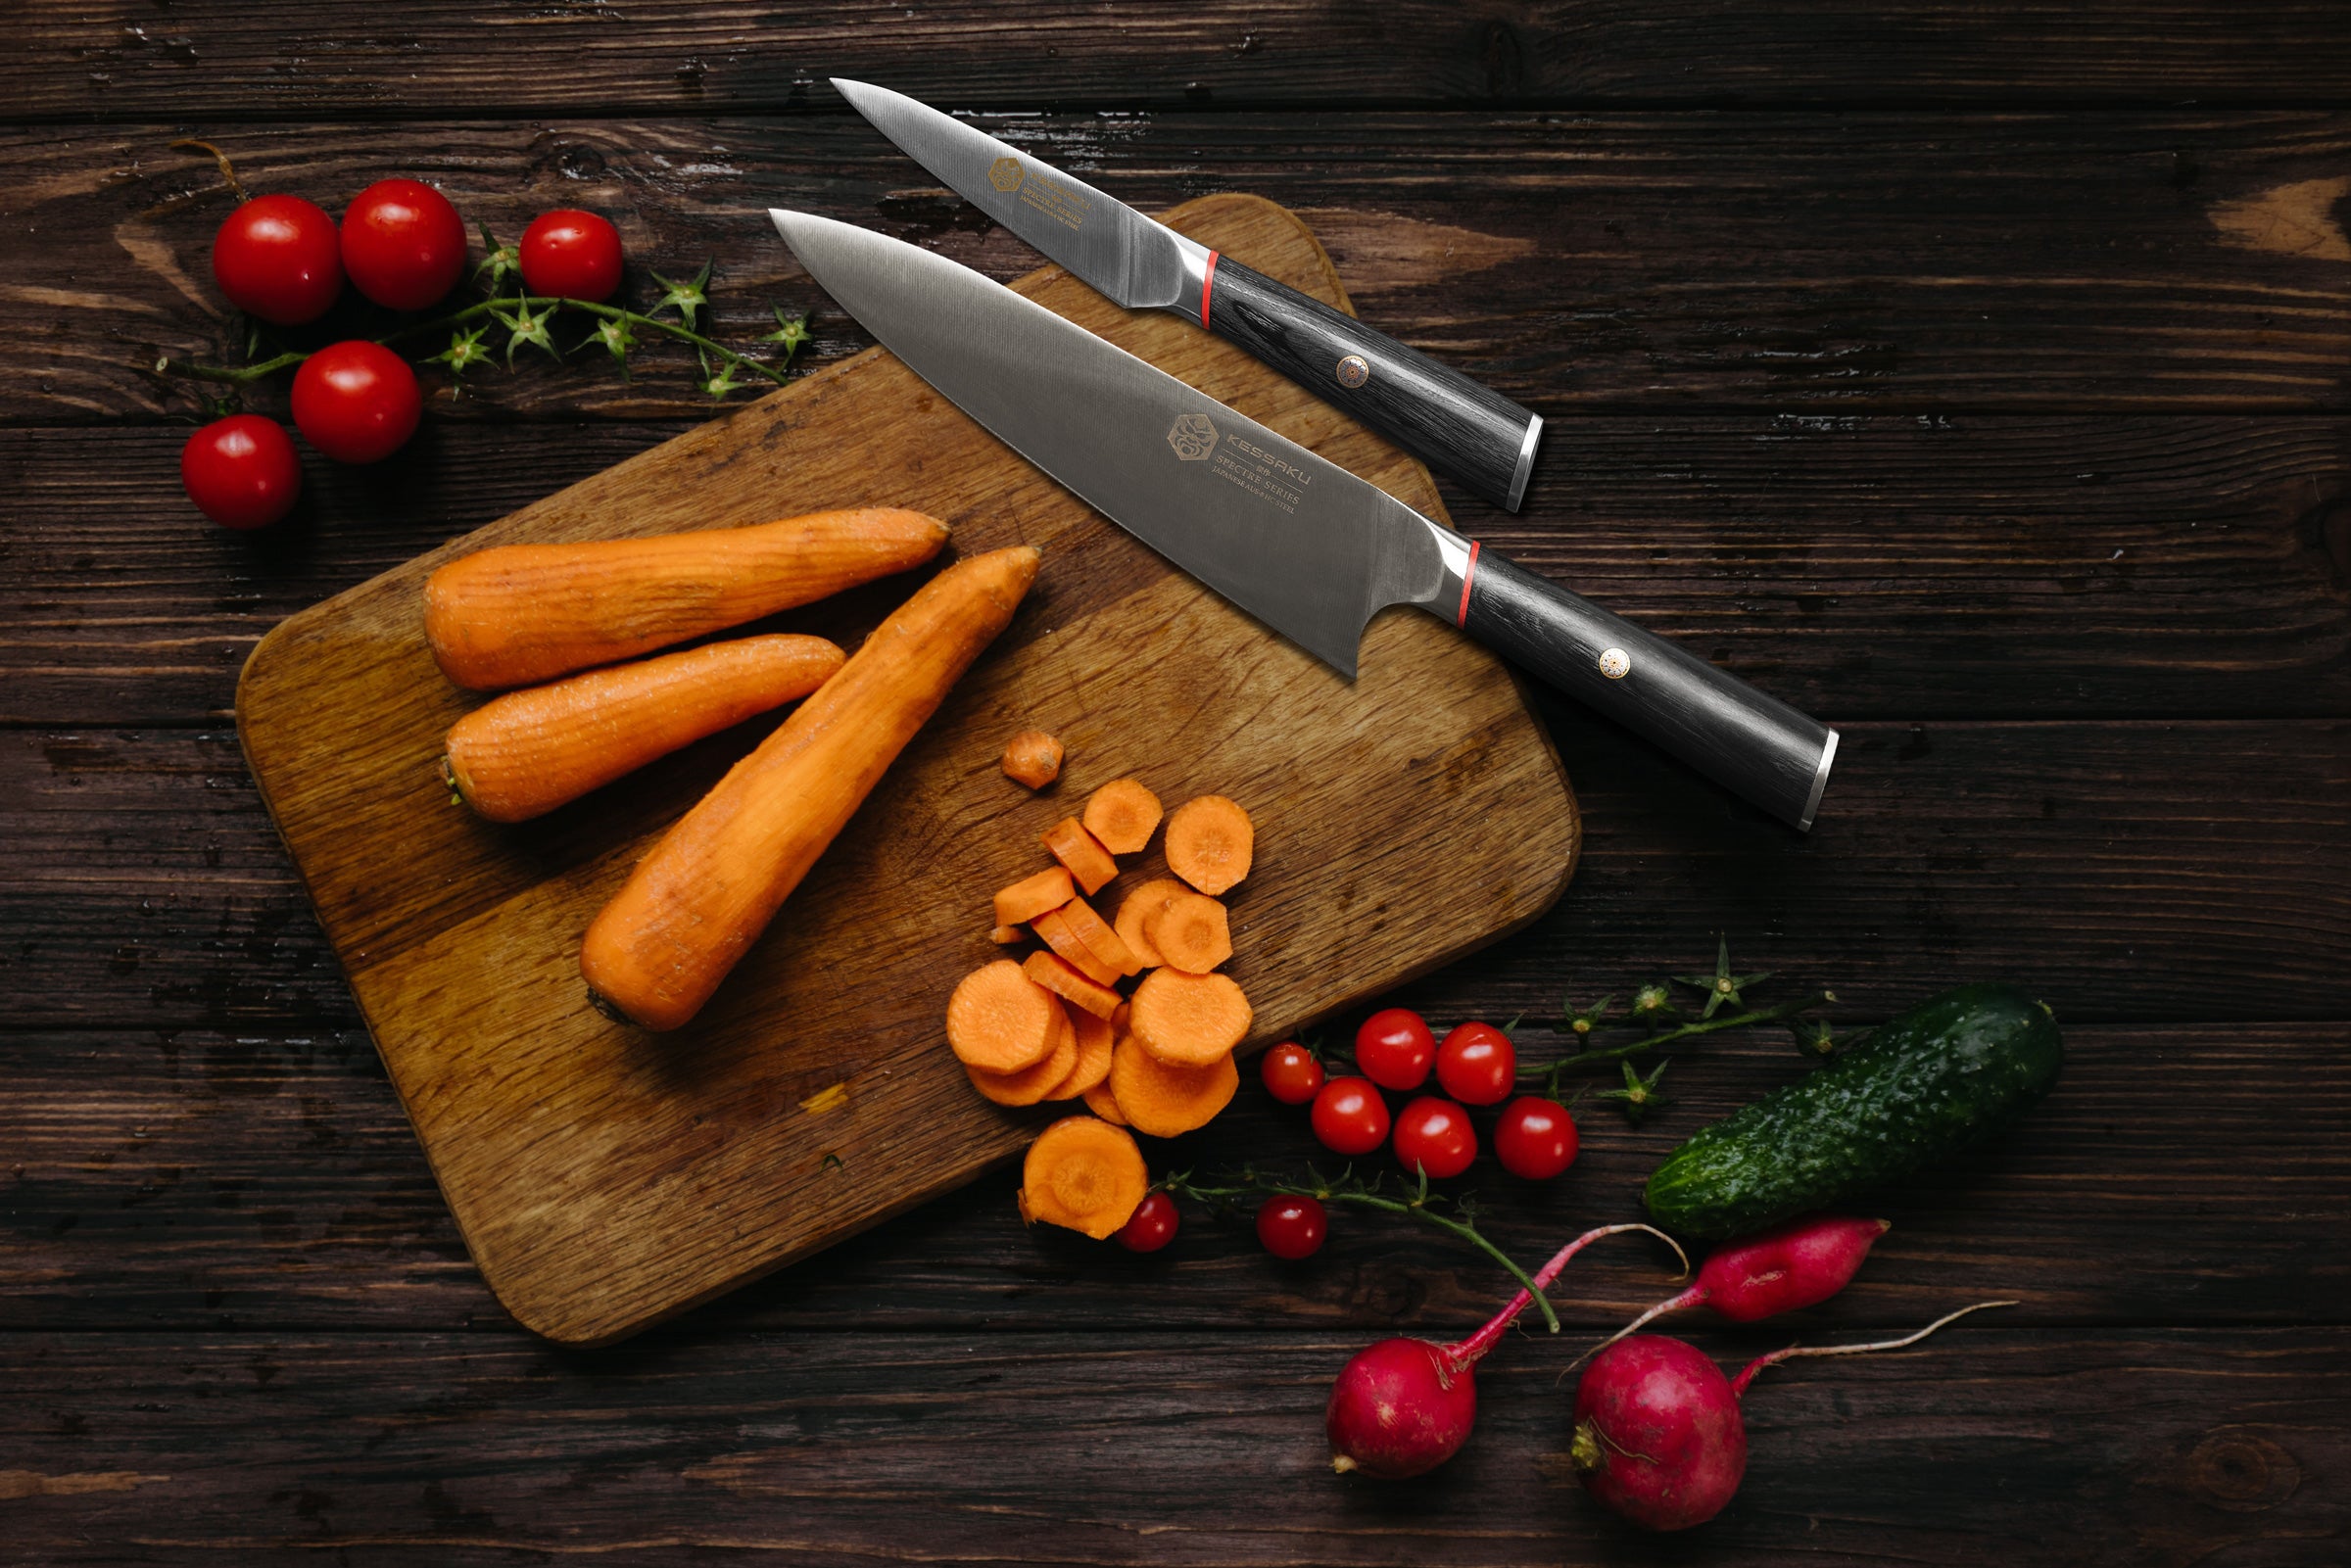 FOXEL Best Paring Knife 4 inch - Small Fruit Knife - Razor Sharp